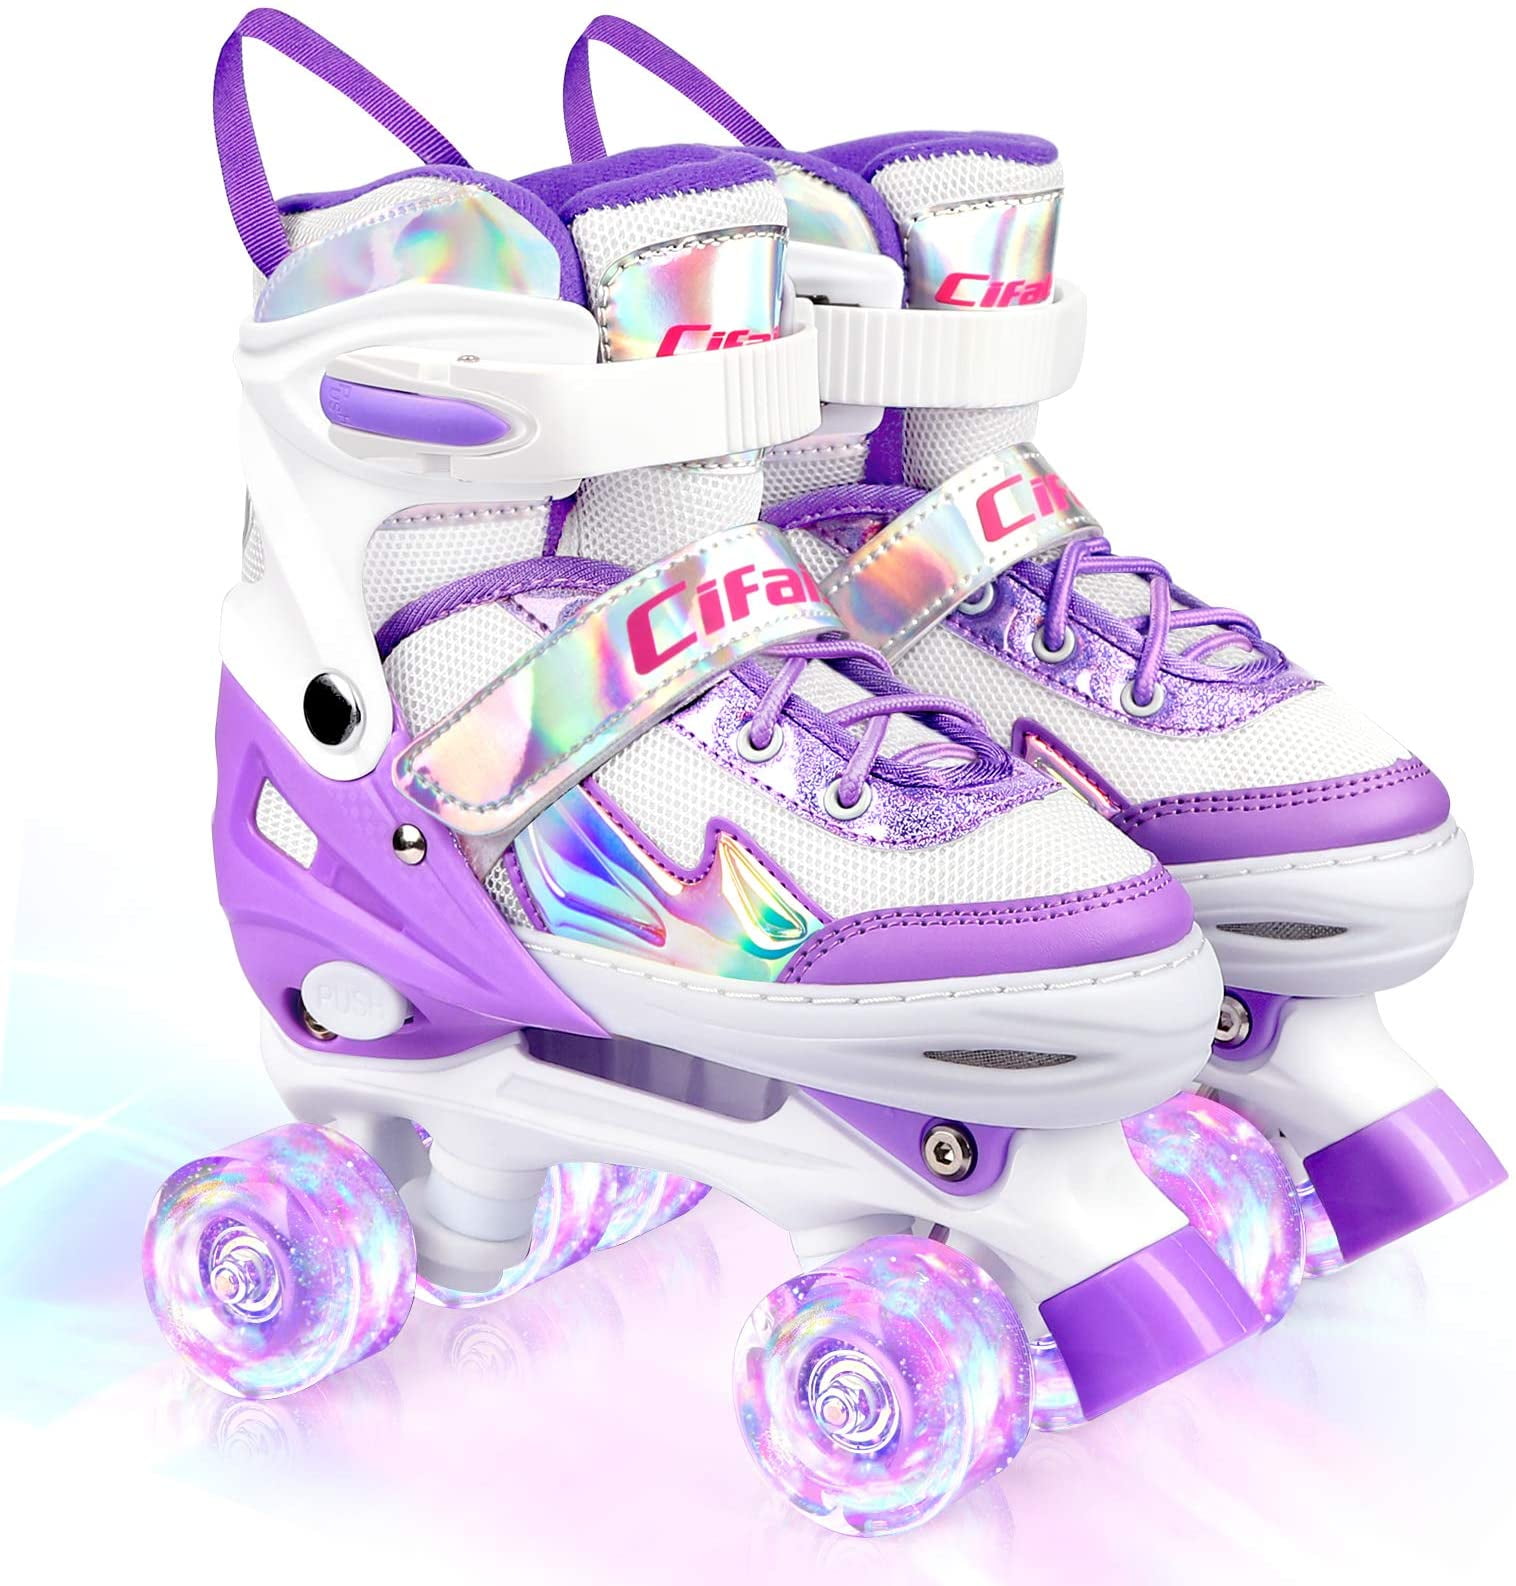 Adjustable Roller Skates for Girls Kids Boys with Light up Wheels Purple, 